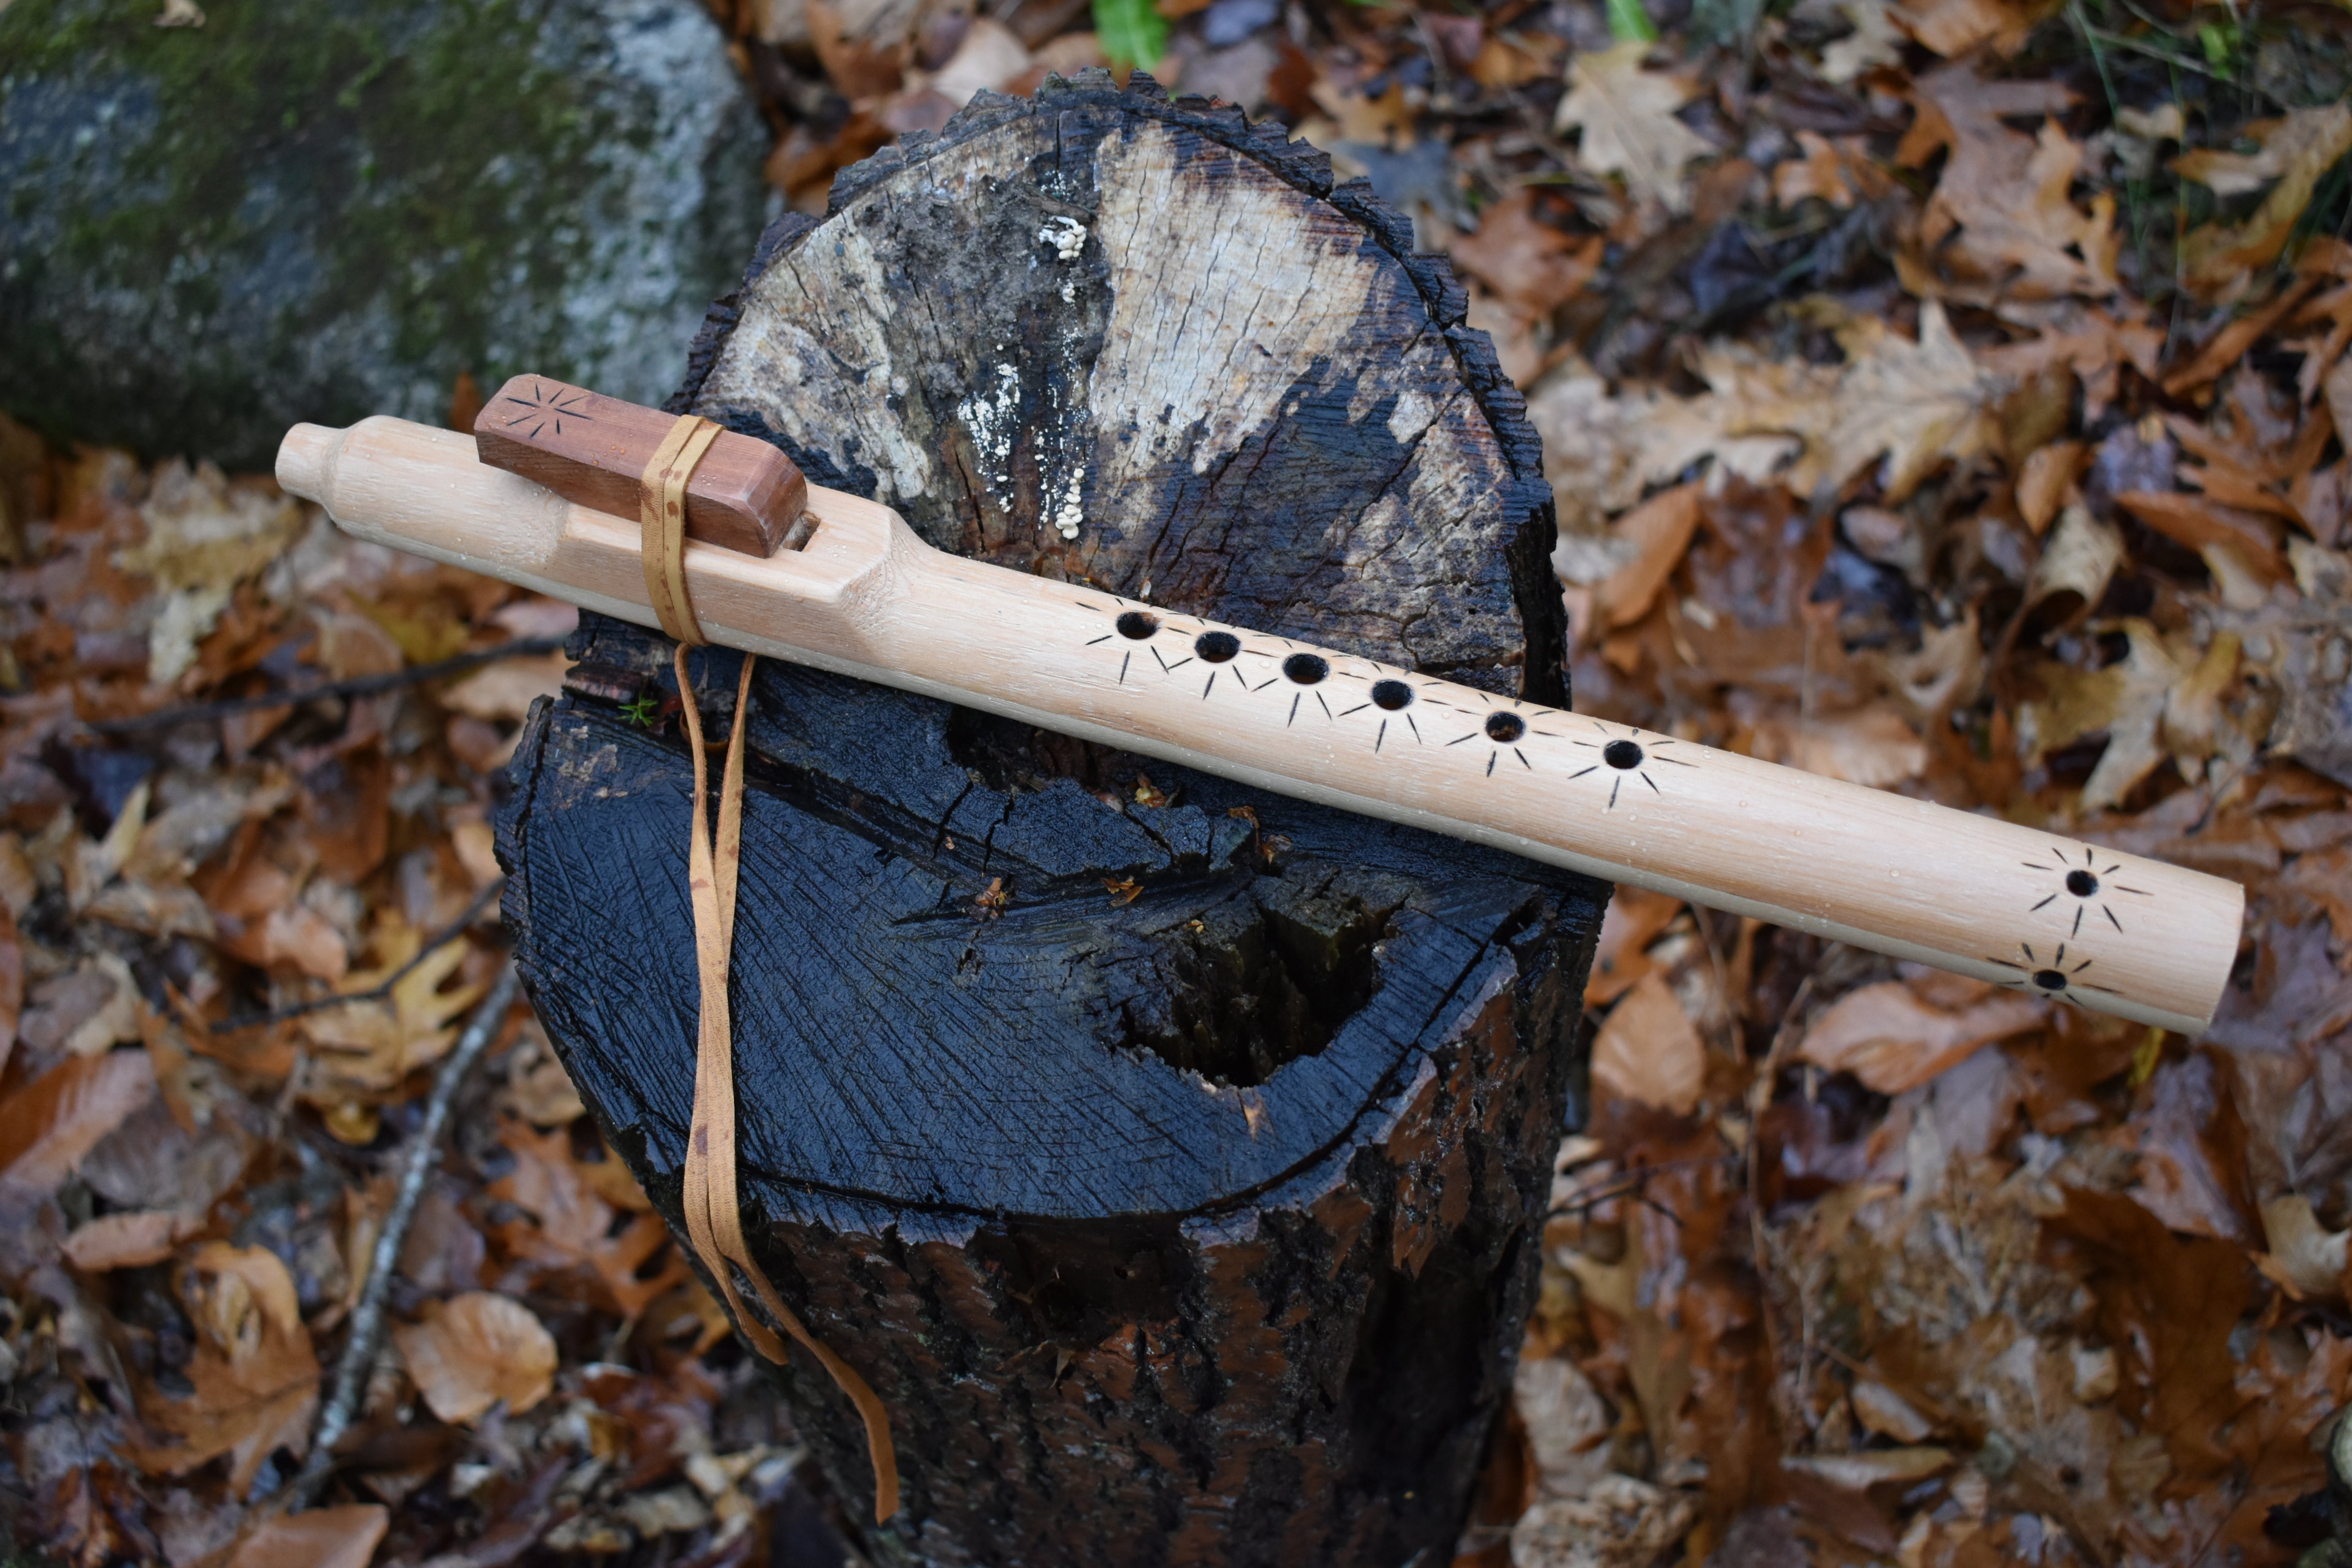 Native American Style Flute in A Minor - Western Red Cedar